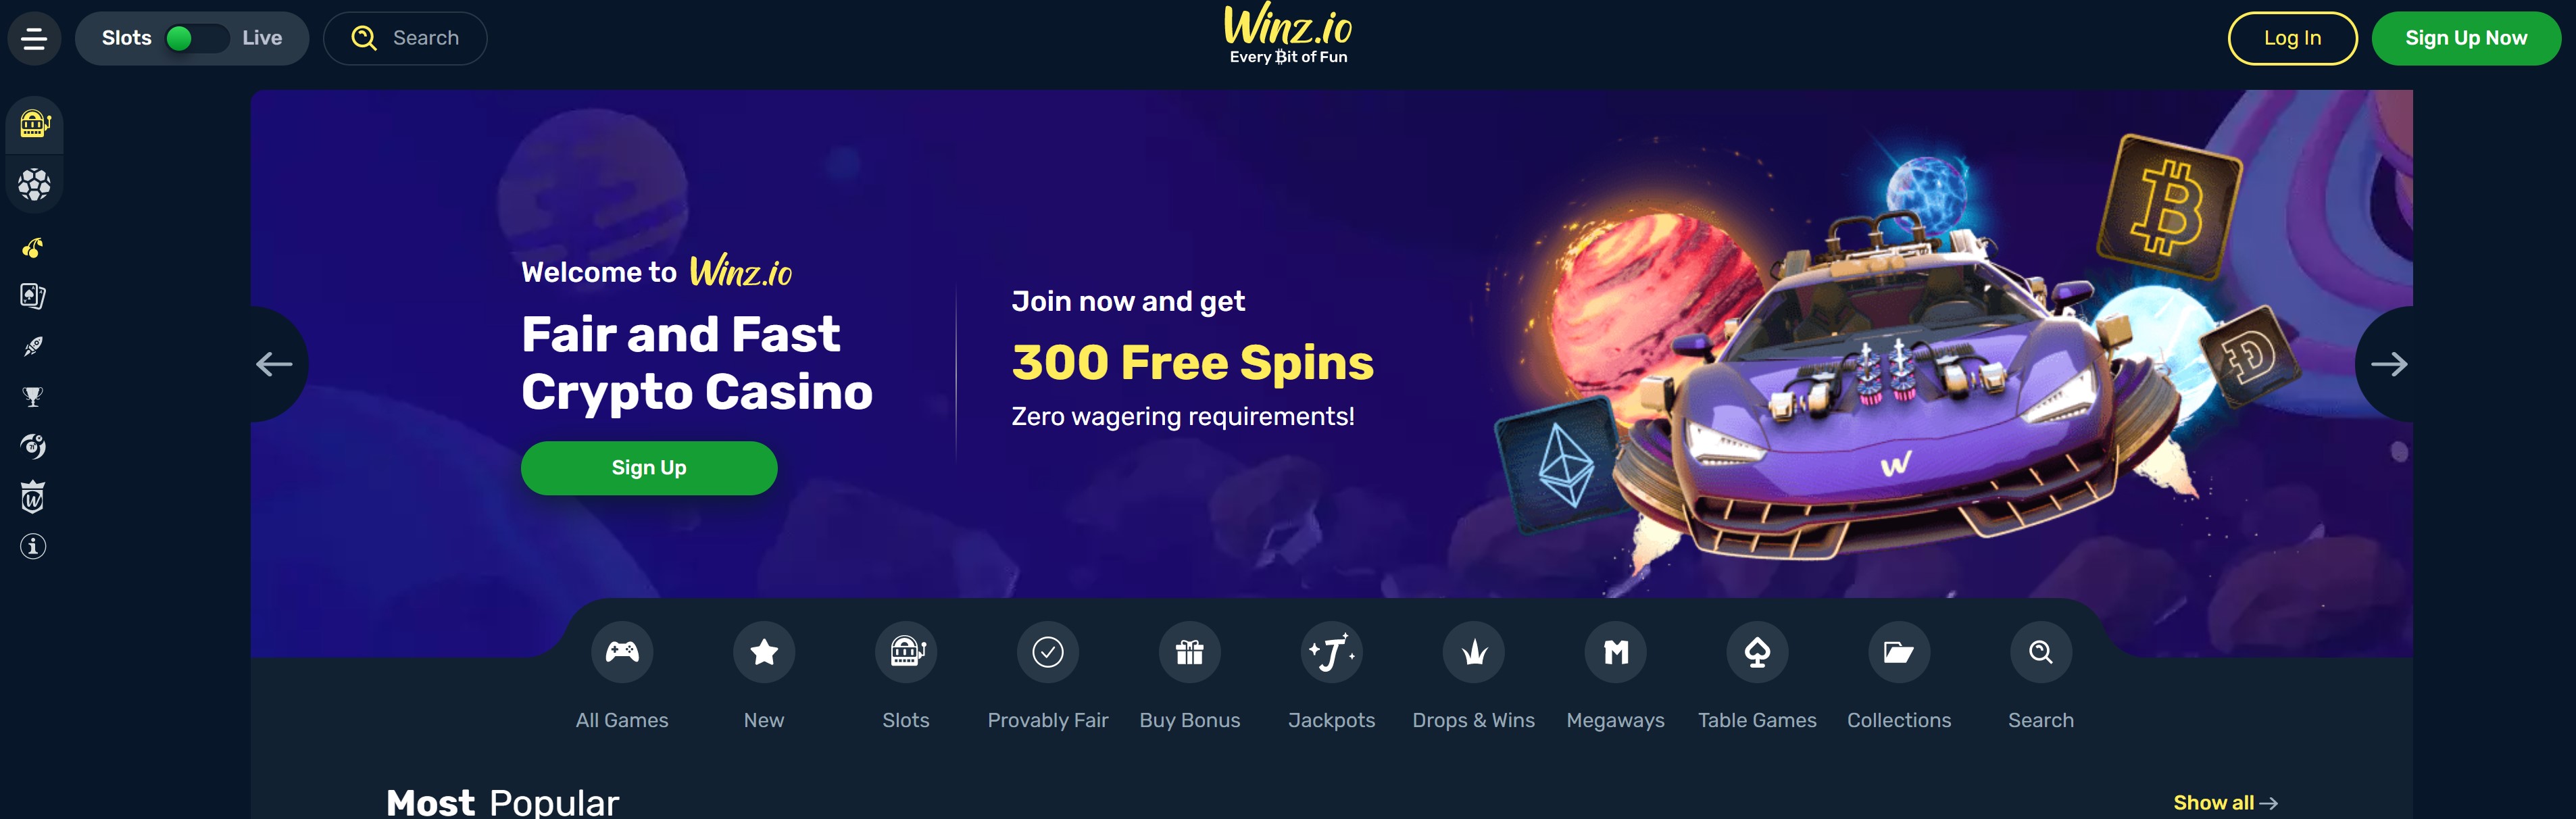 winz casino 300 free spins bonus